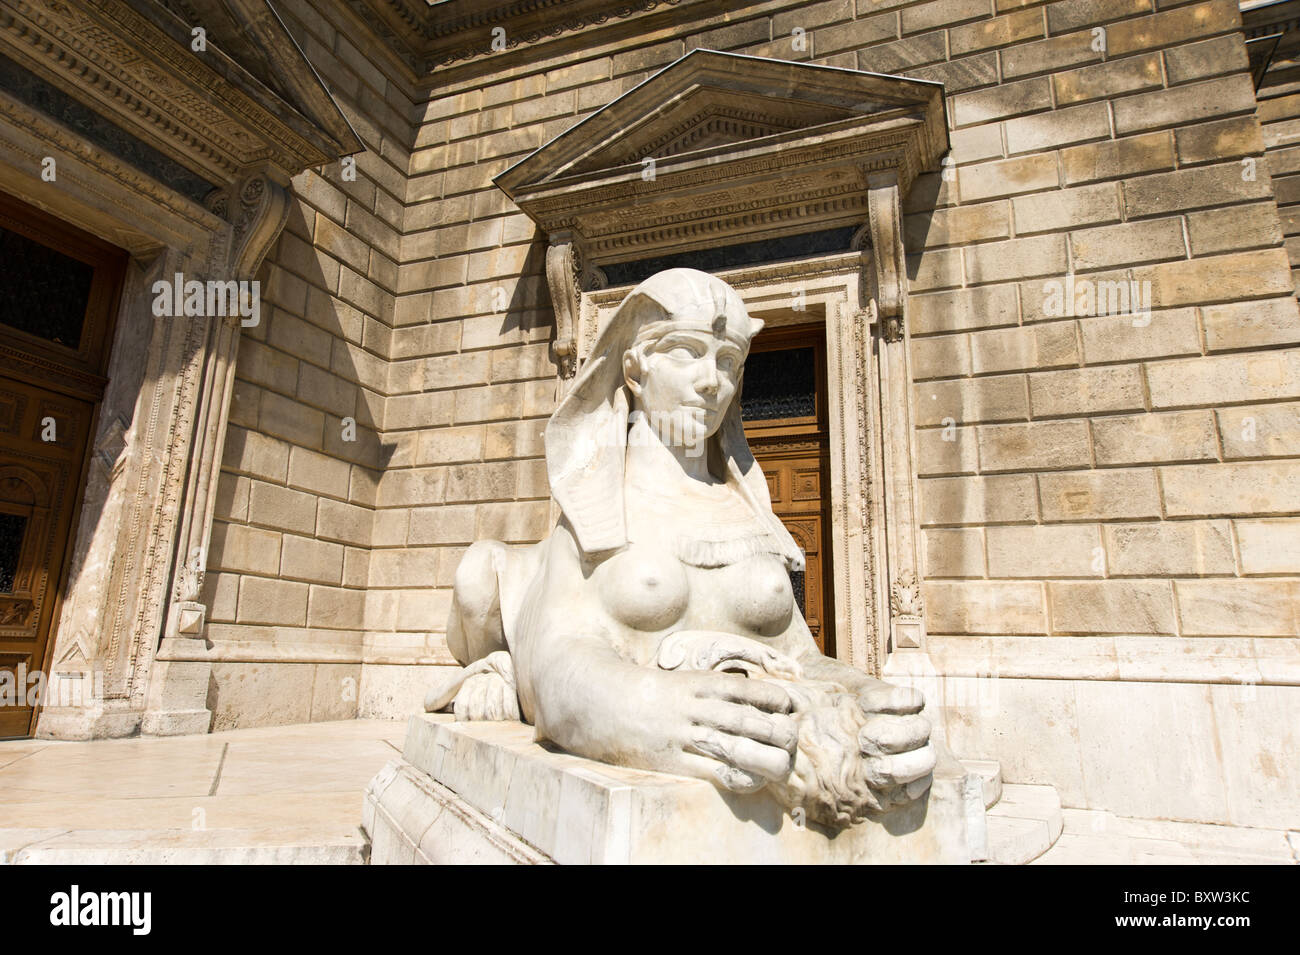 Sculpture outside the Budapest Opera House, Budapest, Hungary Stock Photo